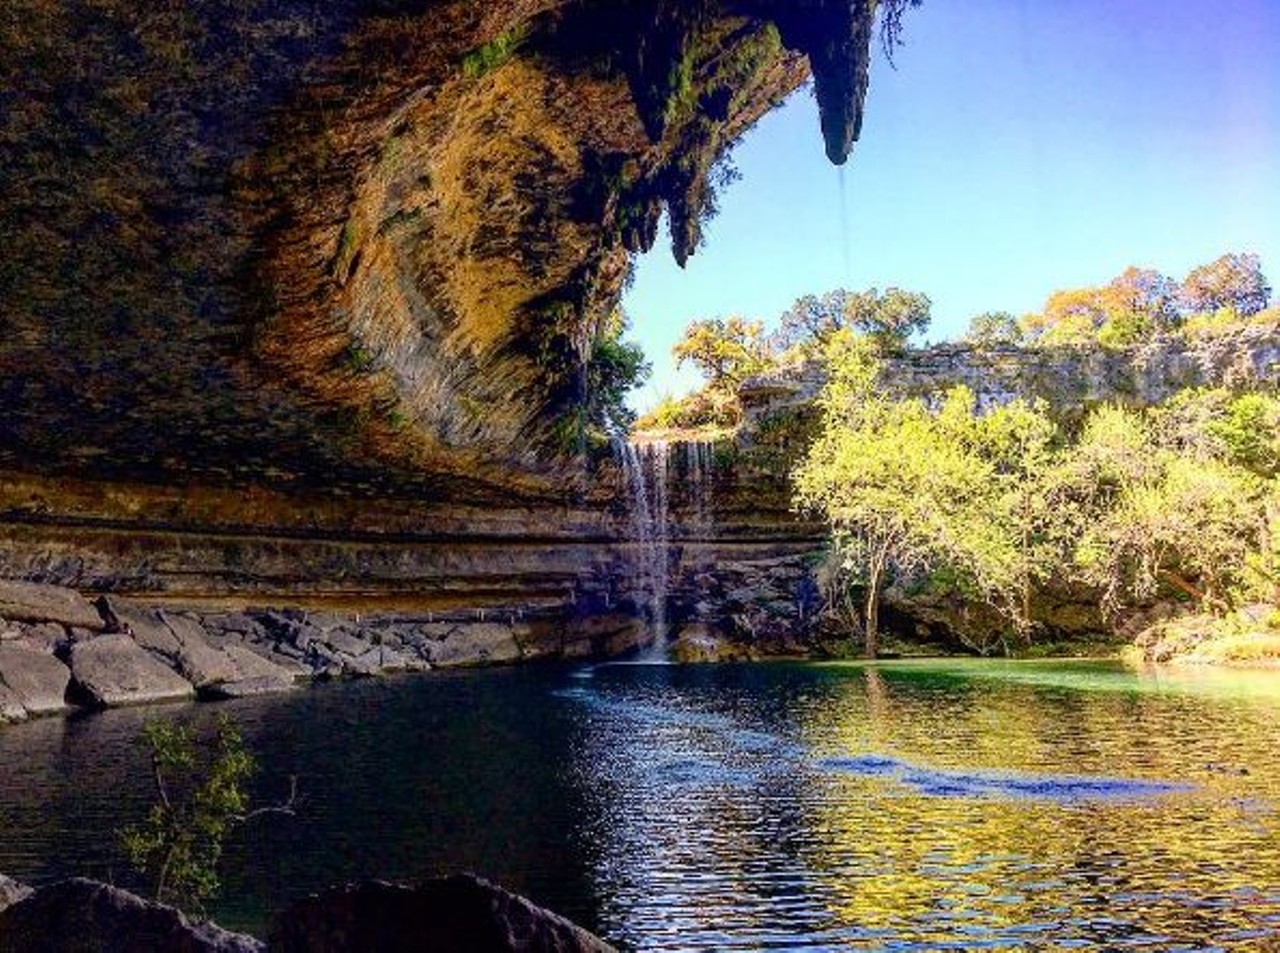 Visit Hamilton Pool
24300 Hamilton Pool Road, Dripping Springs, (512) 264-2740, parks.traviscountytx.gov
Okay it&#146;s not in San Antonio, but don&#146;t you wish it was?
Photo via Instagram, coryblada